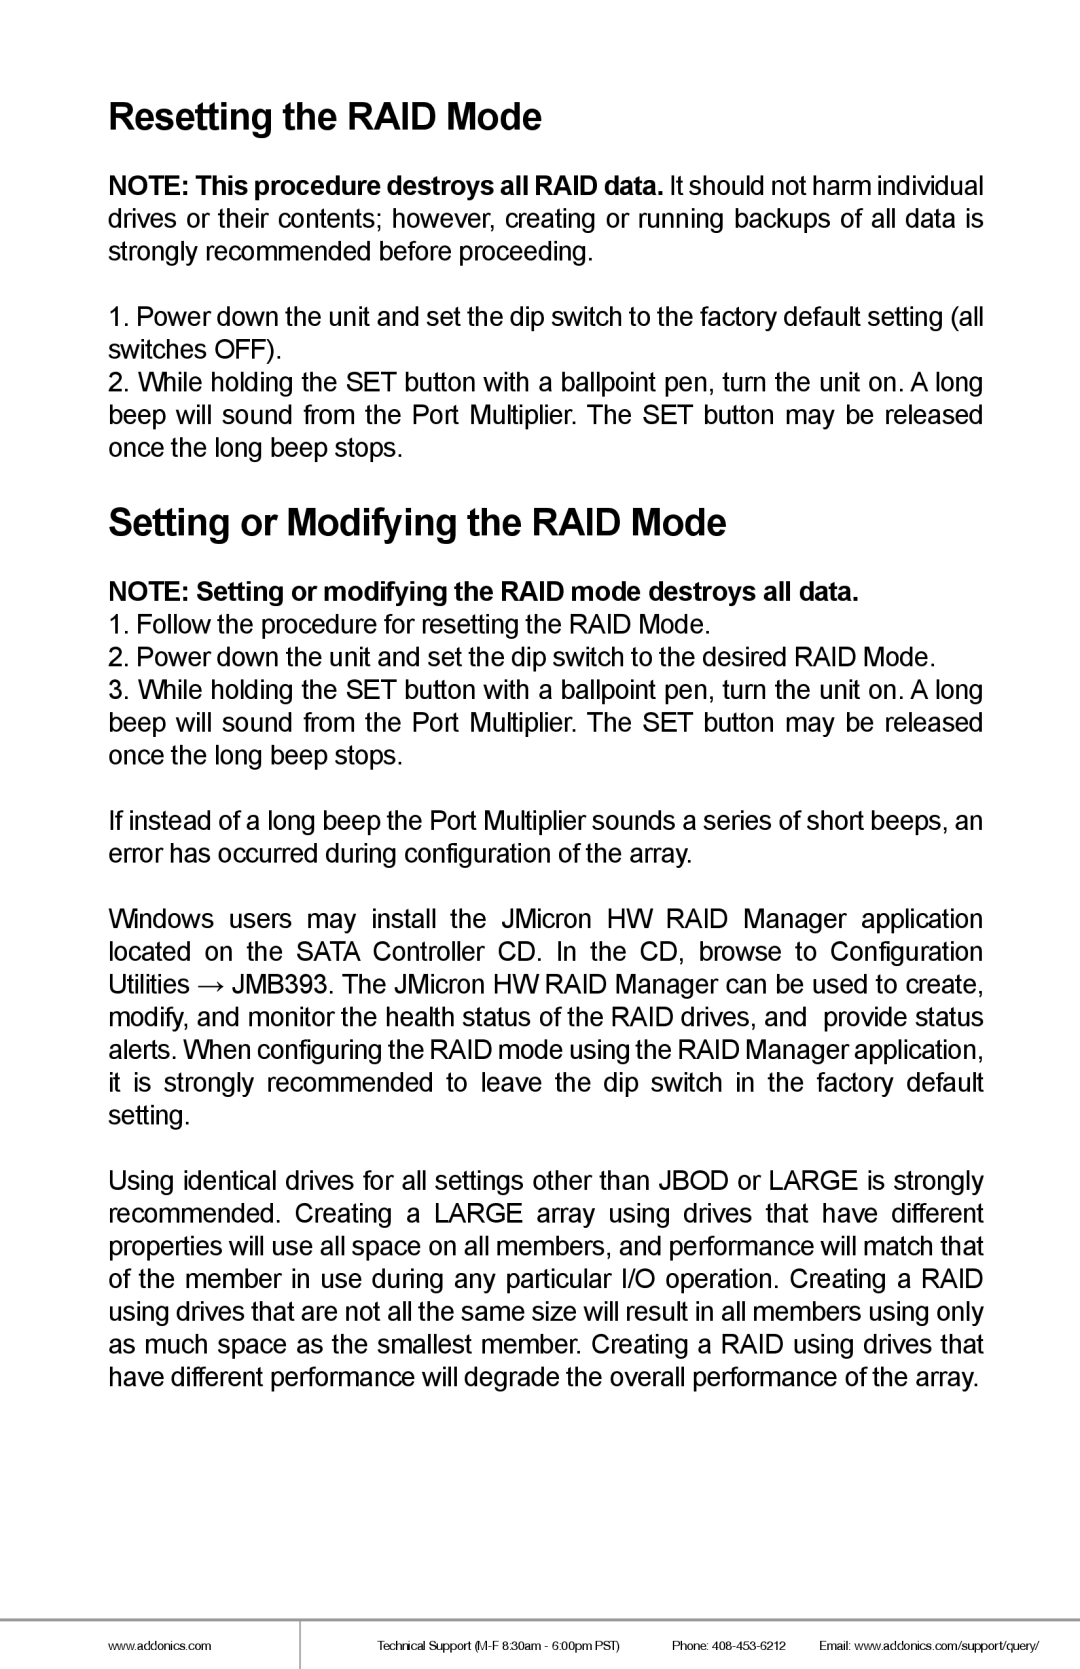 Addonics Technologies RR2035ASDML manual Resetting the RAID Mode, Setting or Modifying the RAID Mode 